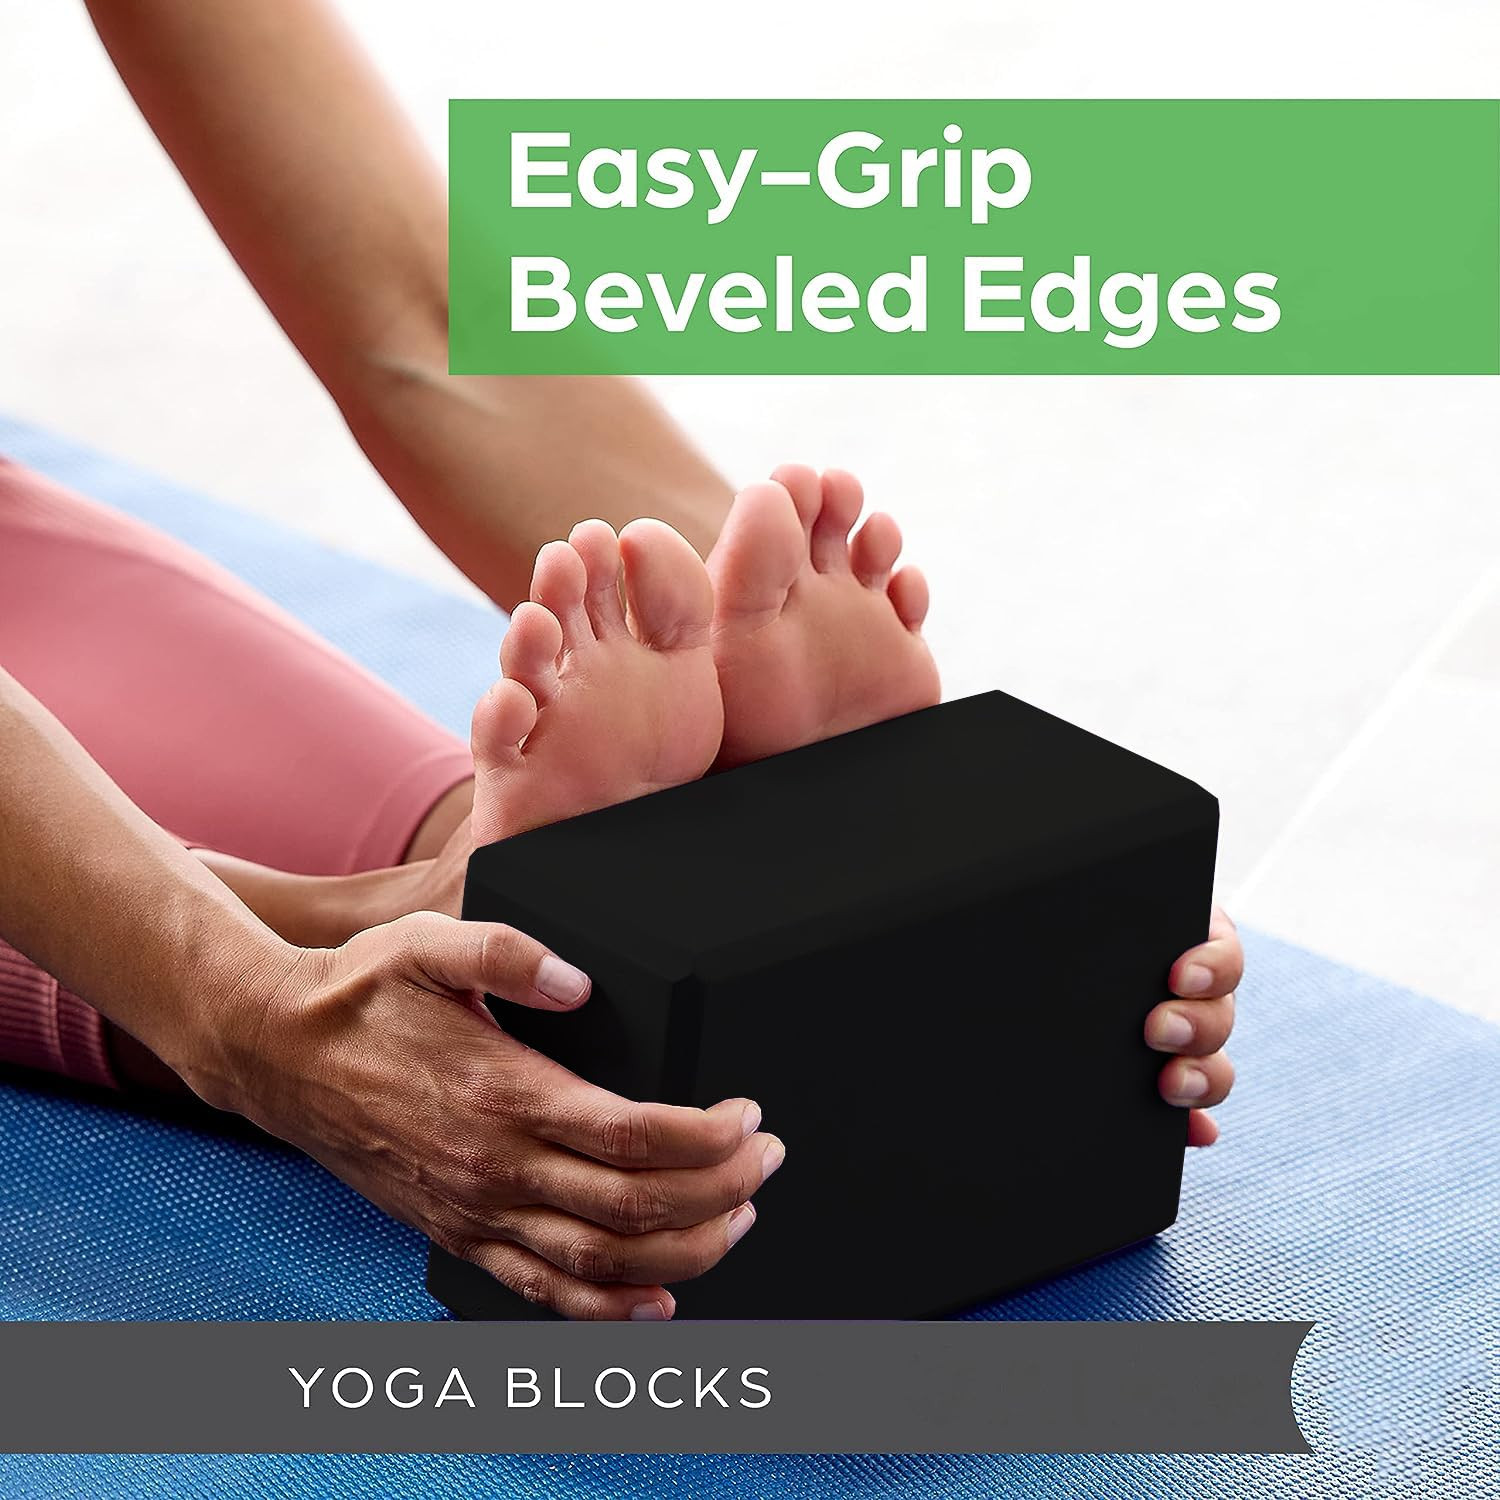 Kuber Industries High-Density Yoga Block|Lightweight & Portable Yoga Brick|Improve Strength & Flexibility (Black)